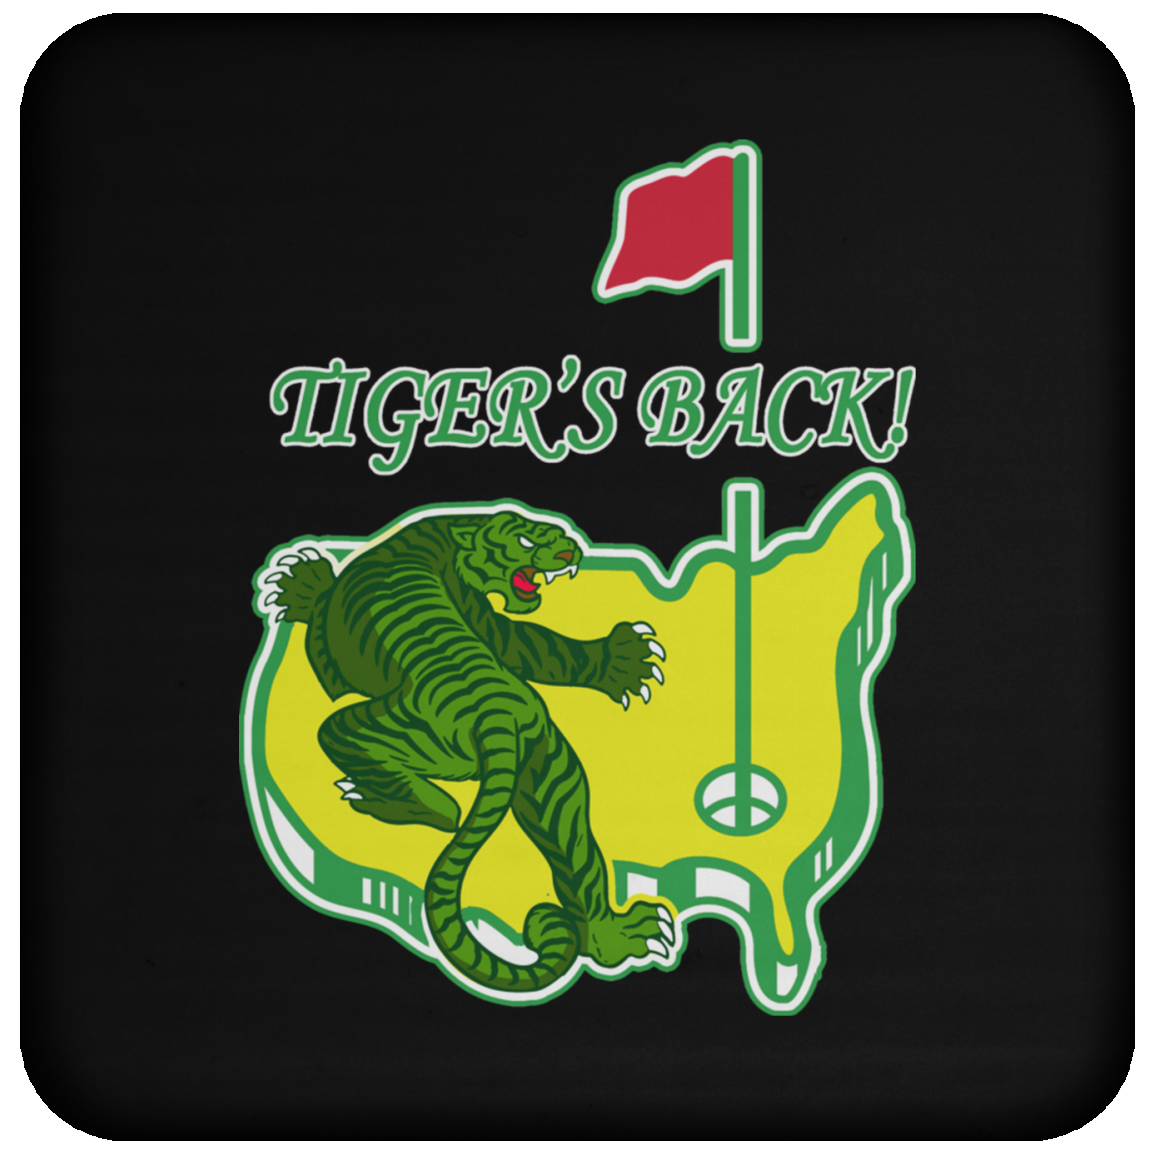 OPG Custom Design #17. Tigers Back. Masters / Tiger Woods Parody. Golf. Coaster